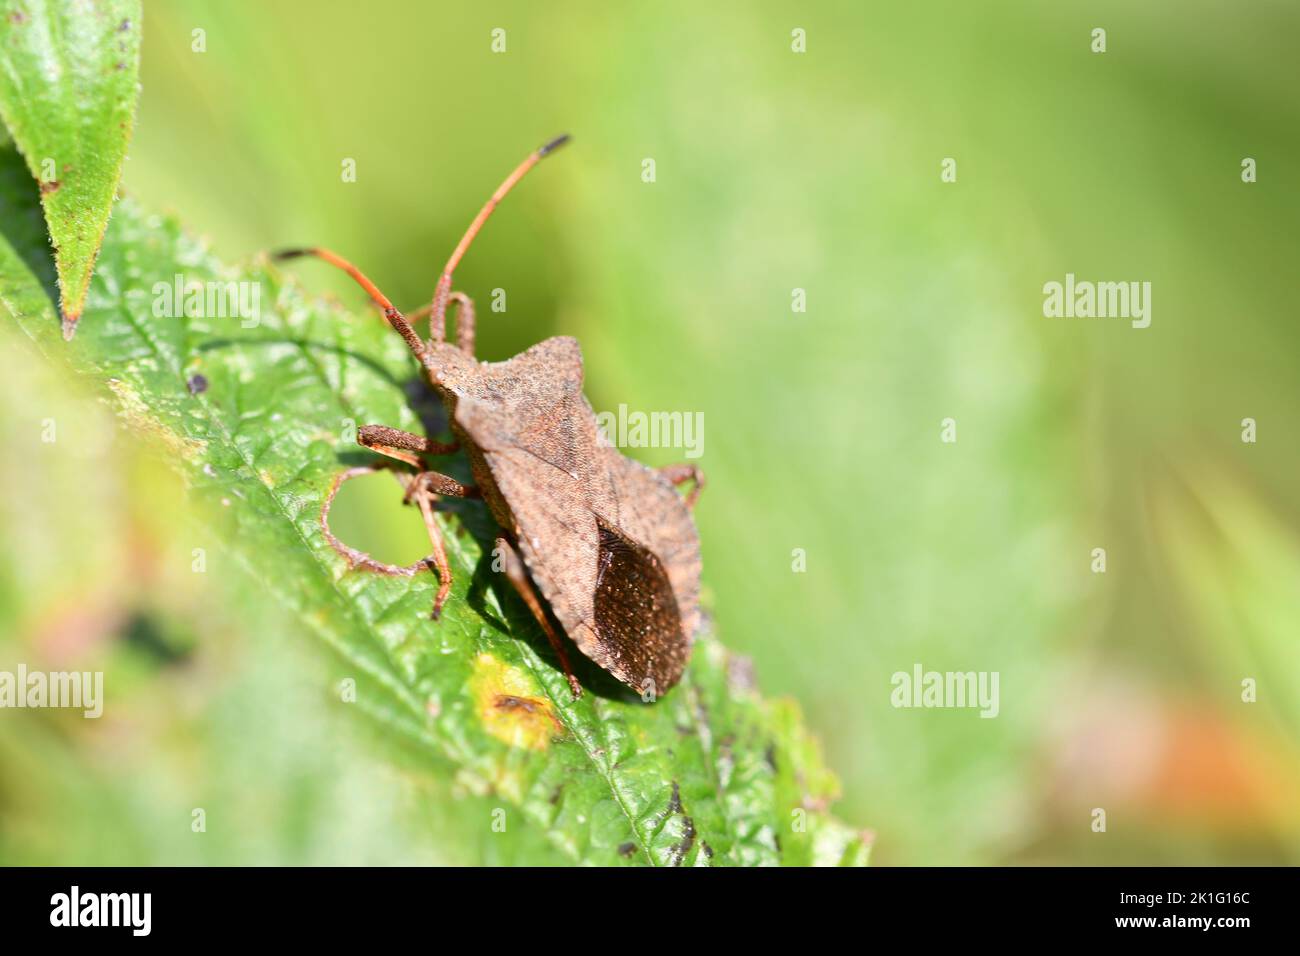 Coreidae, Leaf-footed bug, insects, macro photography, Kilkenny, Ireland Stock Photo